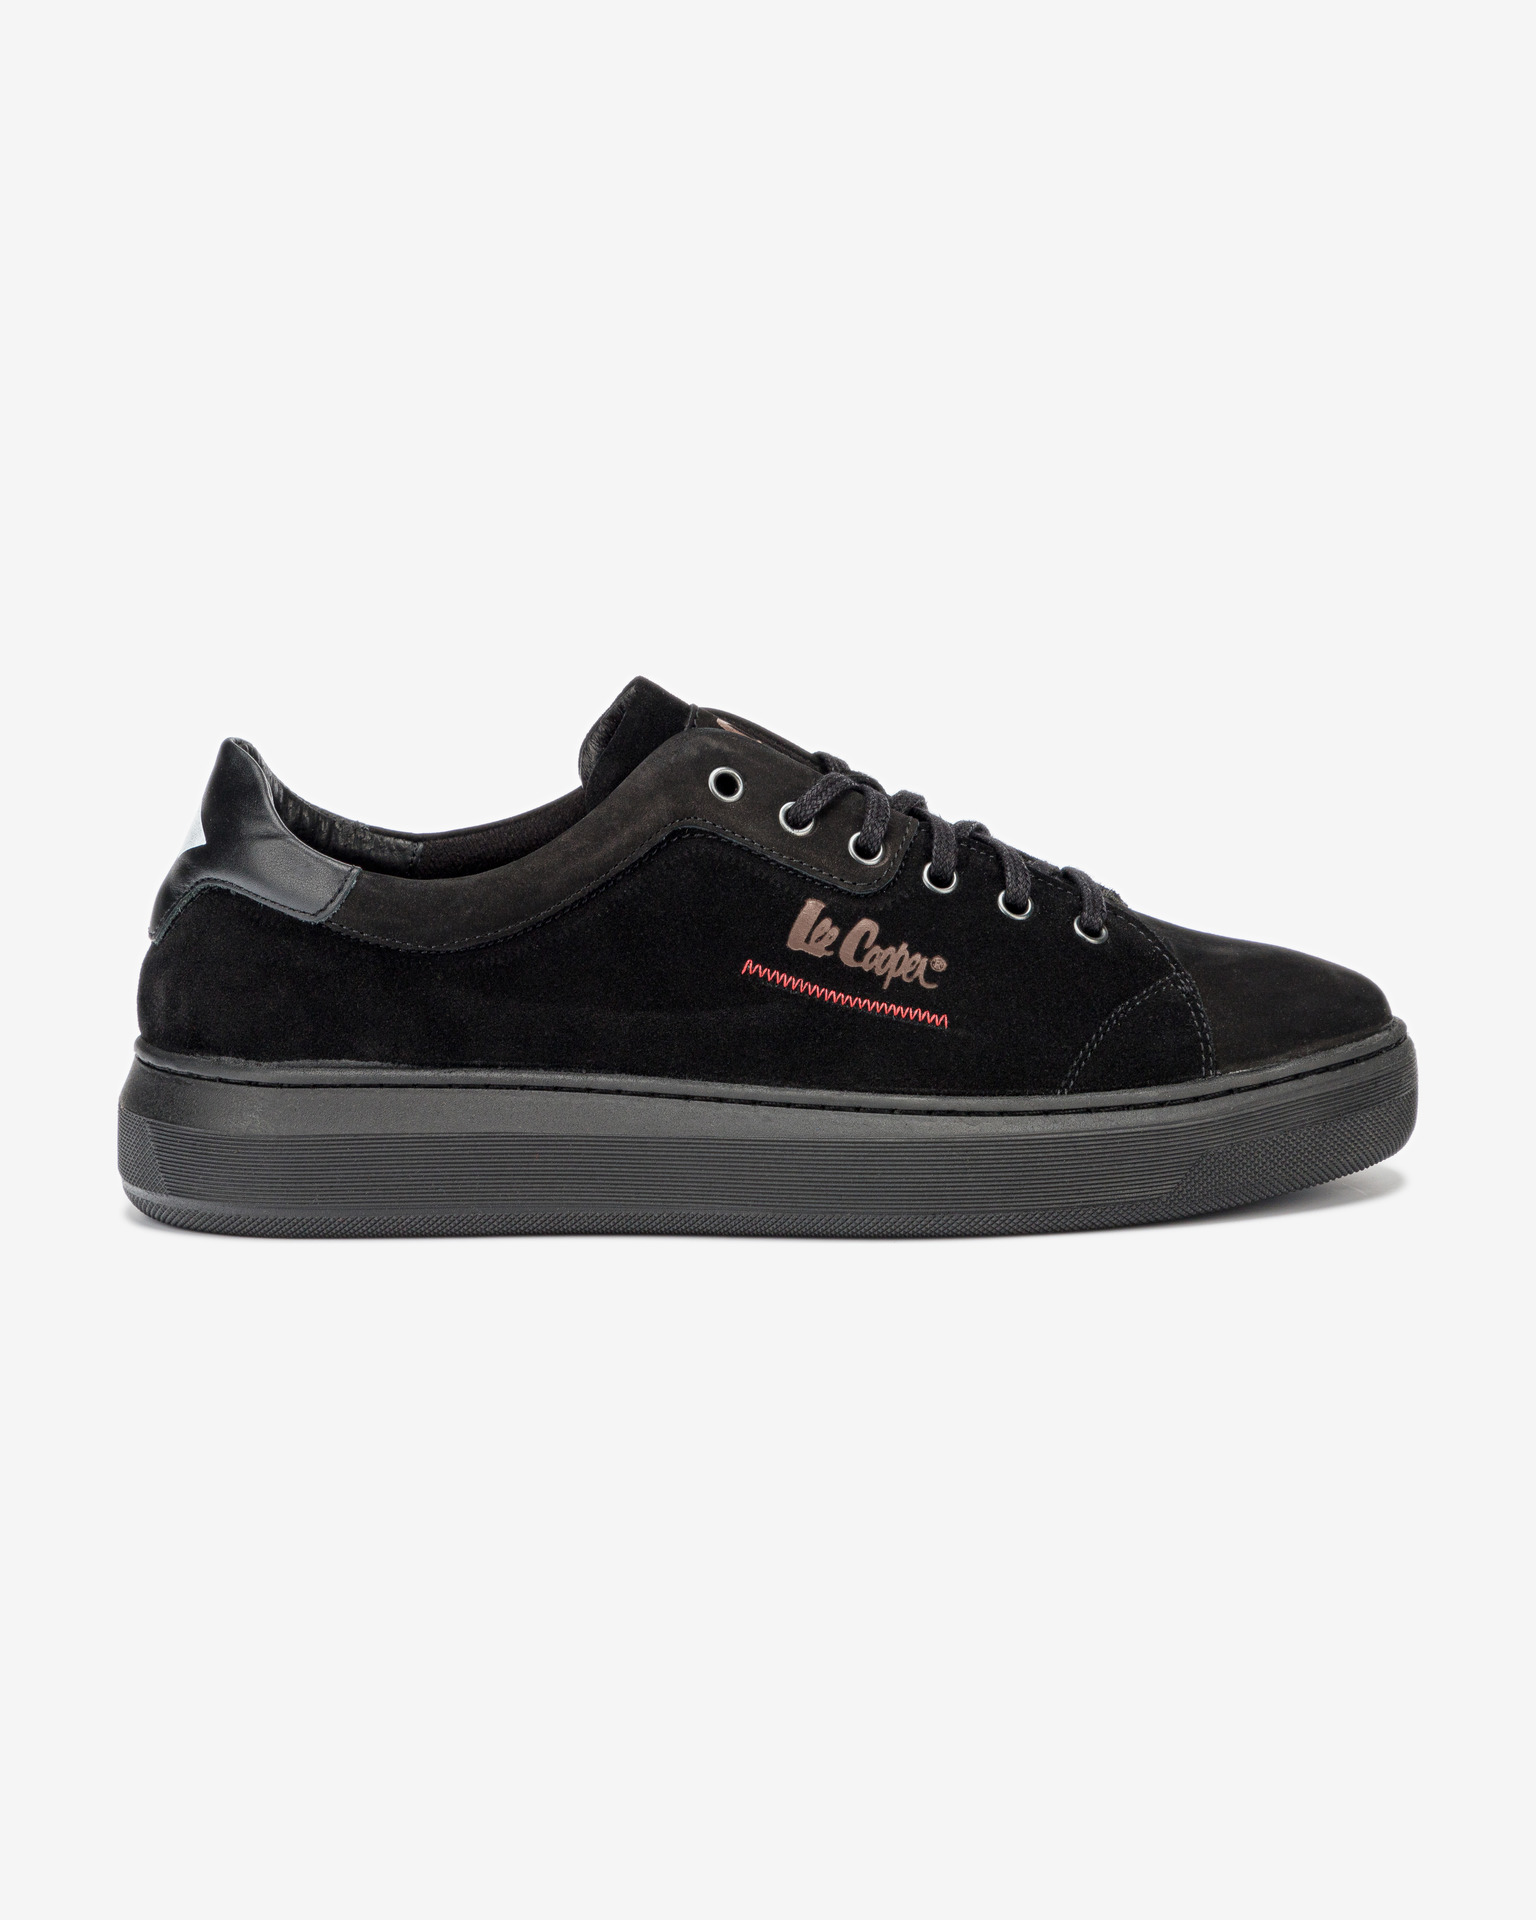 Buy Lee Cooper Men's Black Sneakers - 6 UK/India (40  EU)(FGLC_8907788849444) at Amazon.in